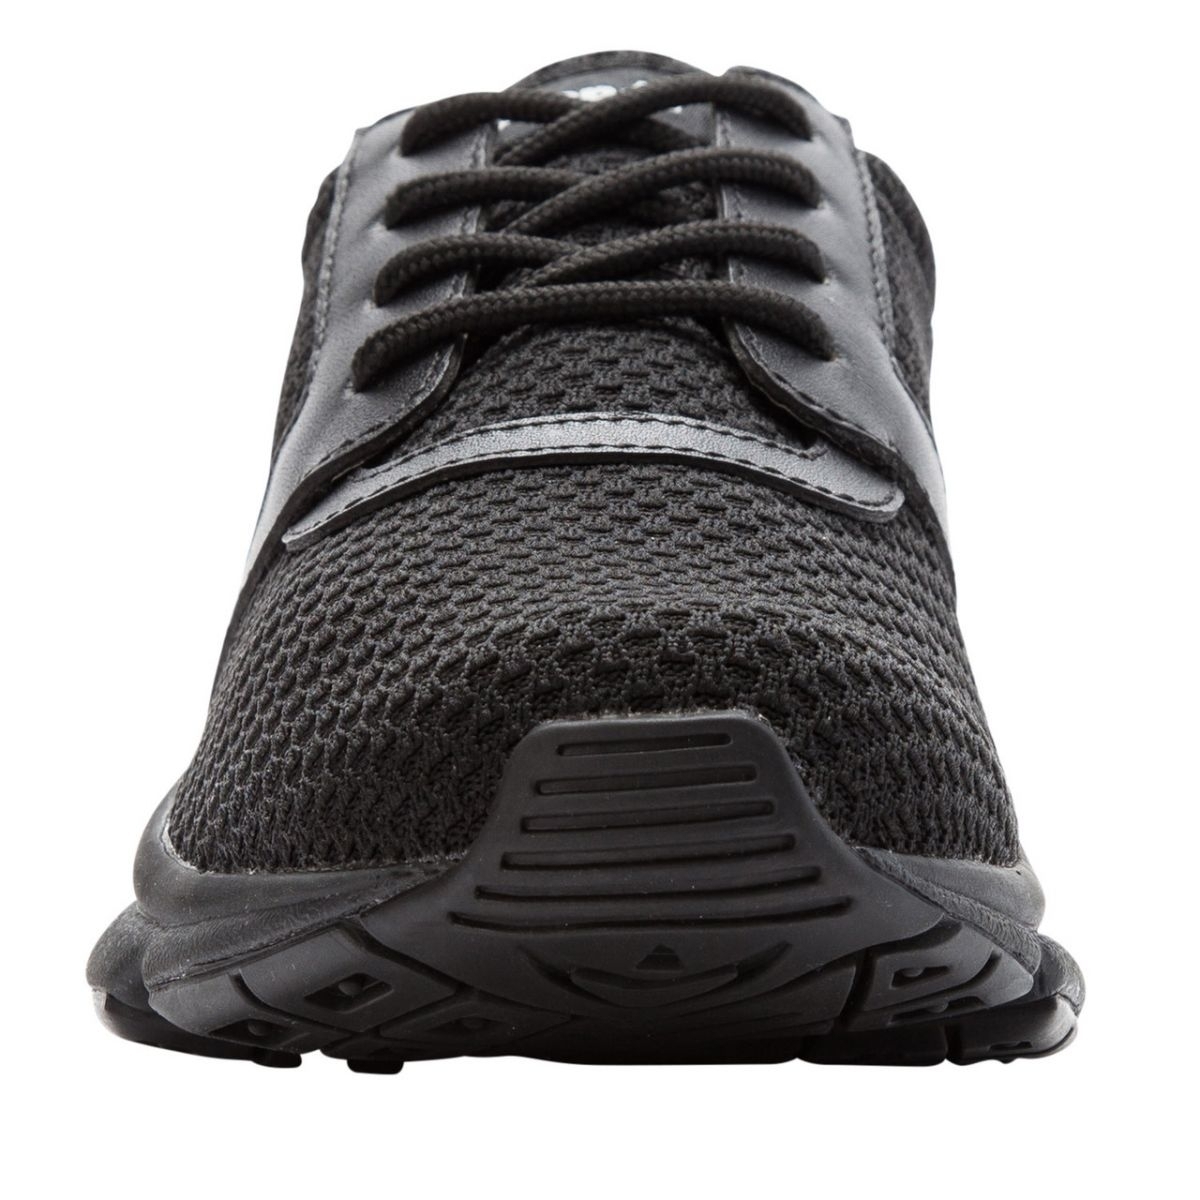 Propet Women's Stability X Walking Shoe Black - WAA032MBLK BLACK - BLACK, 10 Narrow